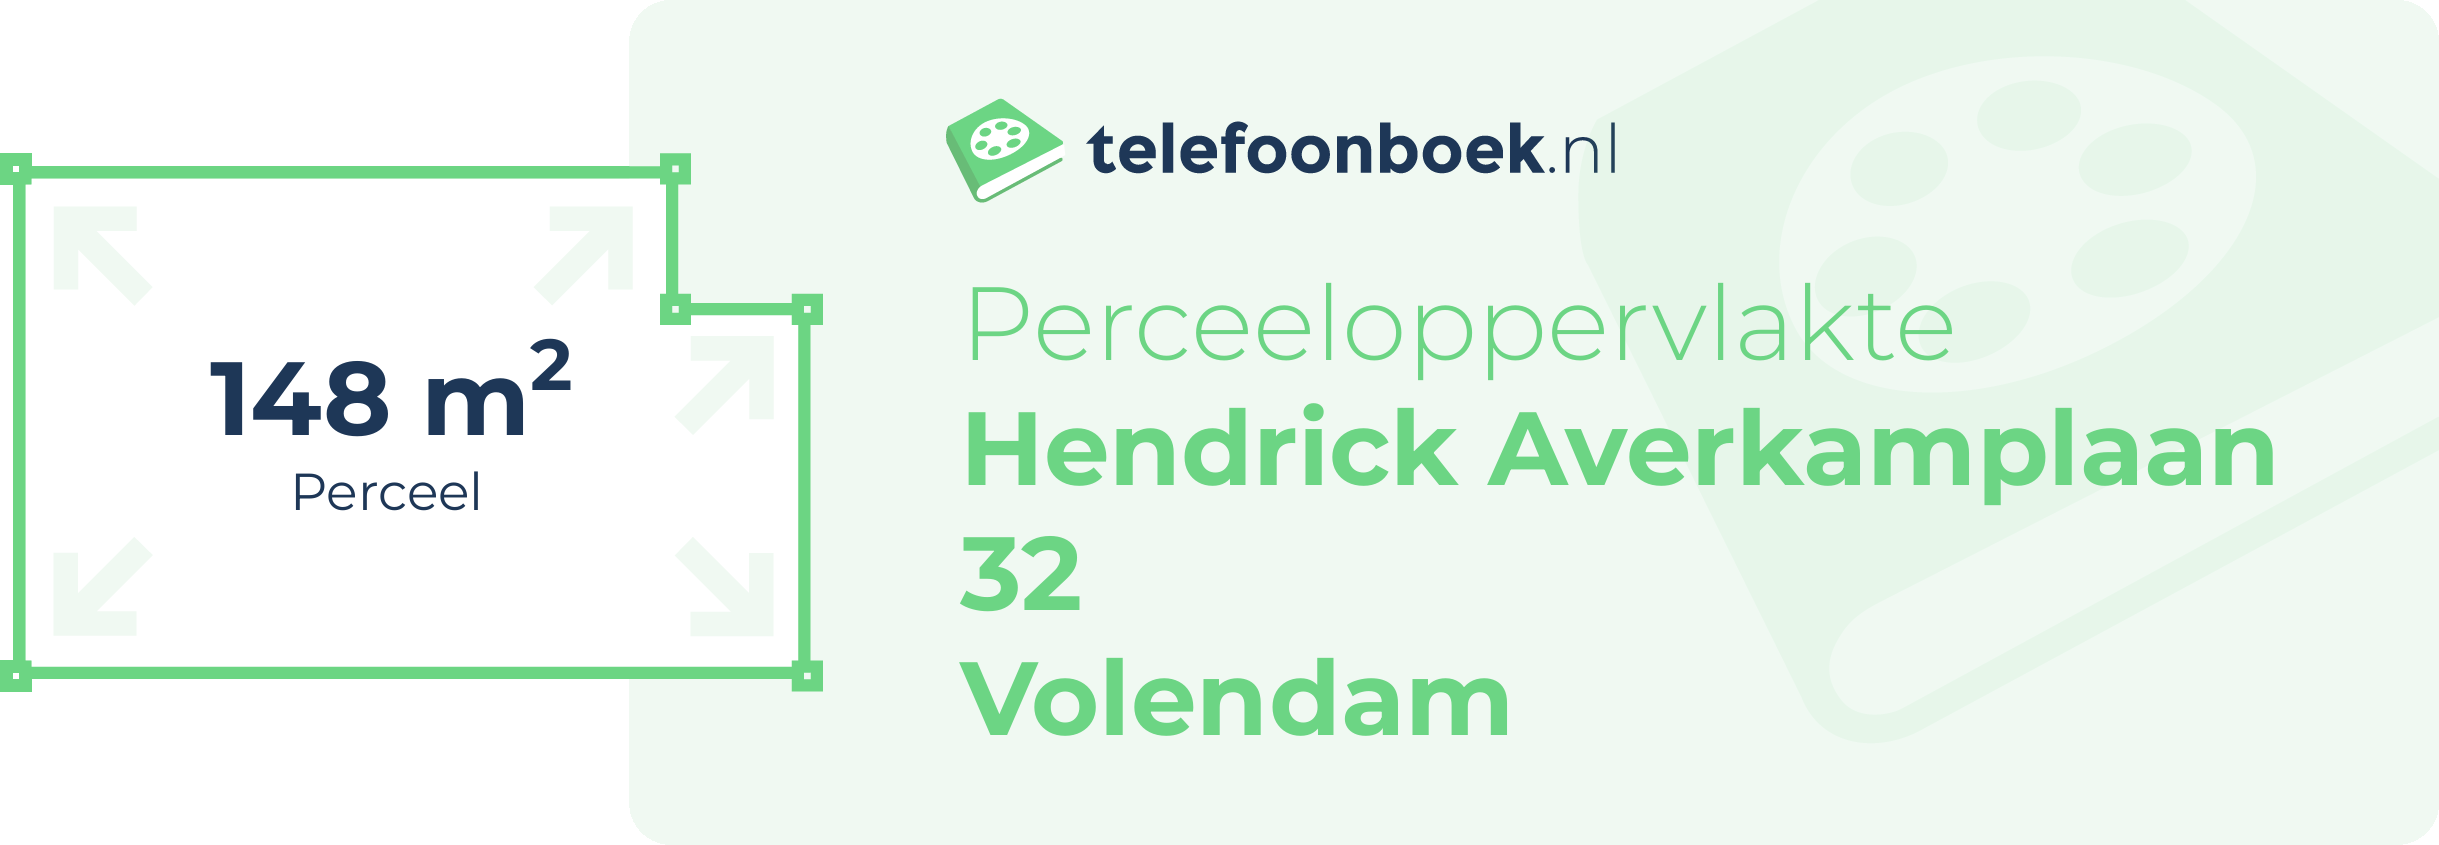 Perceeloppervlakte Hendrick Averkamplaan 32 Volendam